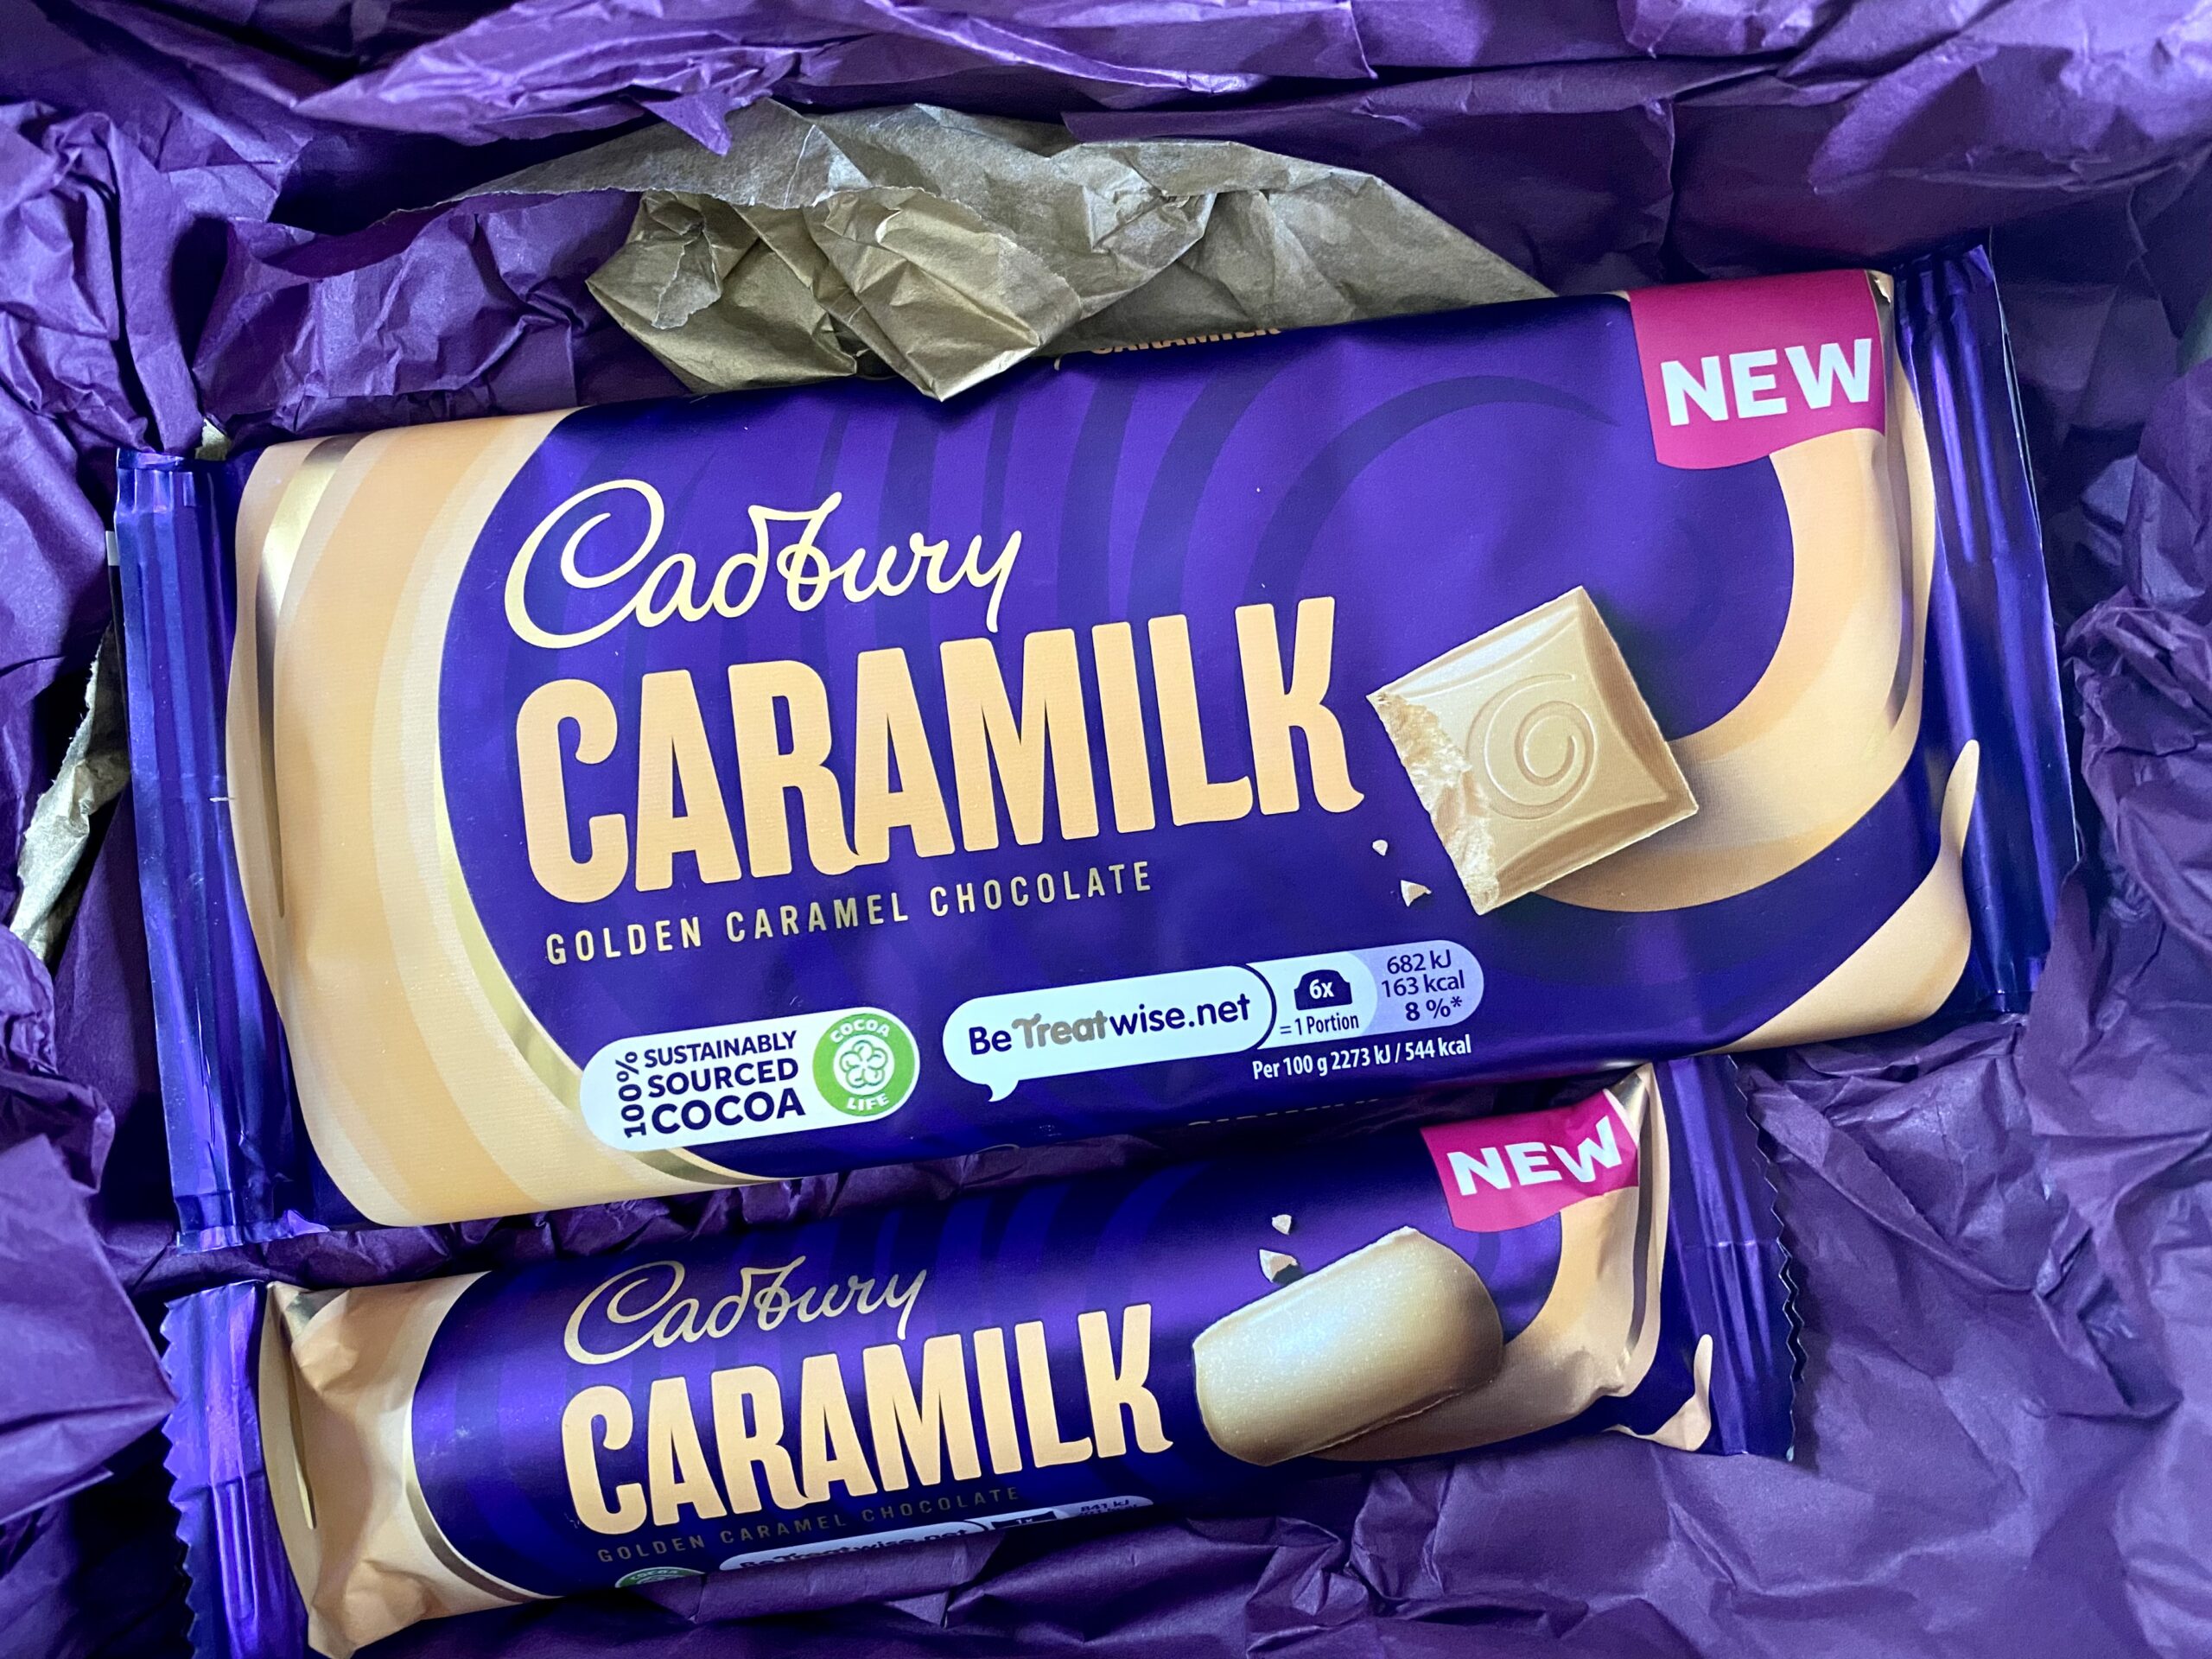 Cadbury Caramilk lands in the UK